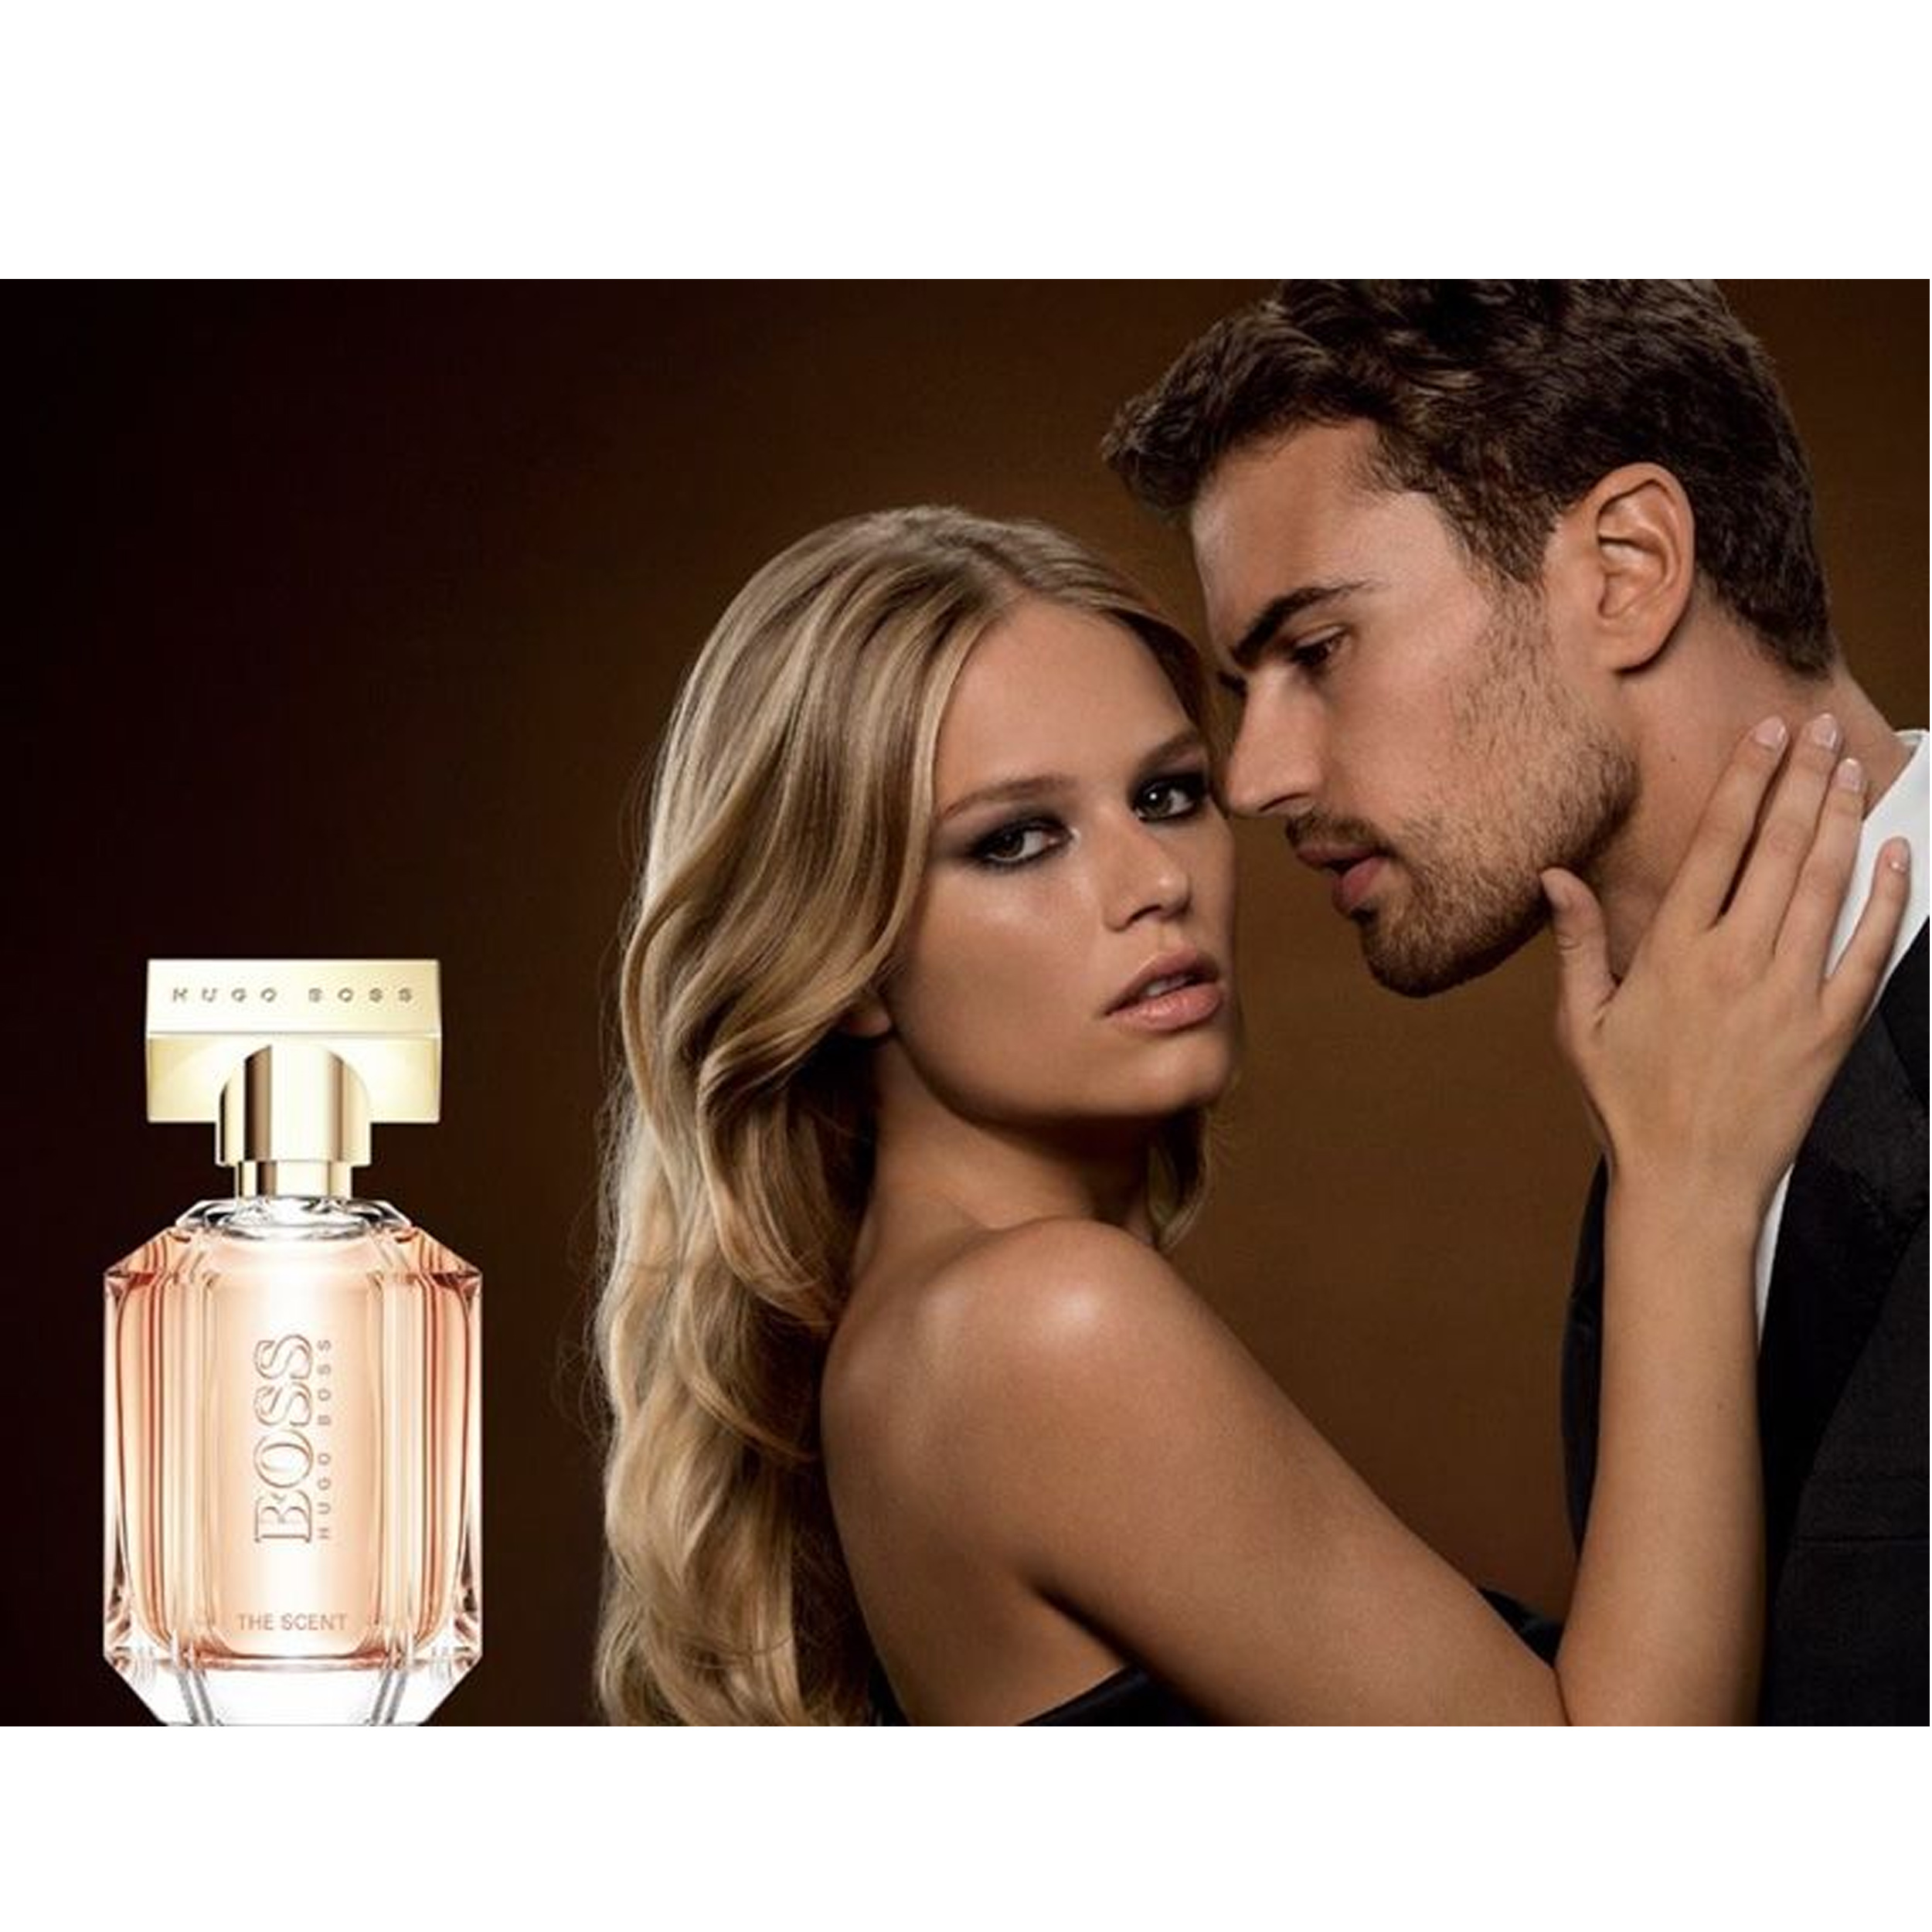 Perfume Boss The Scent For Her Hugo Boss    (Replica Con Fragancia Importada)- Mujer